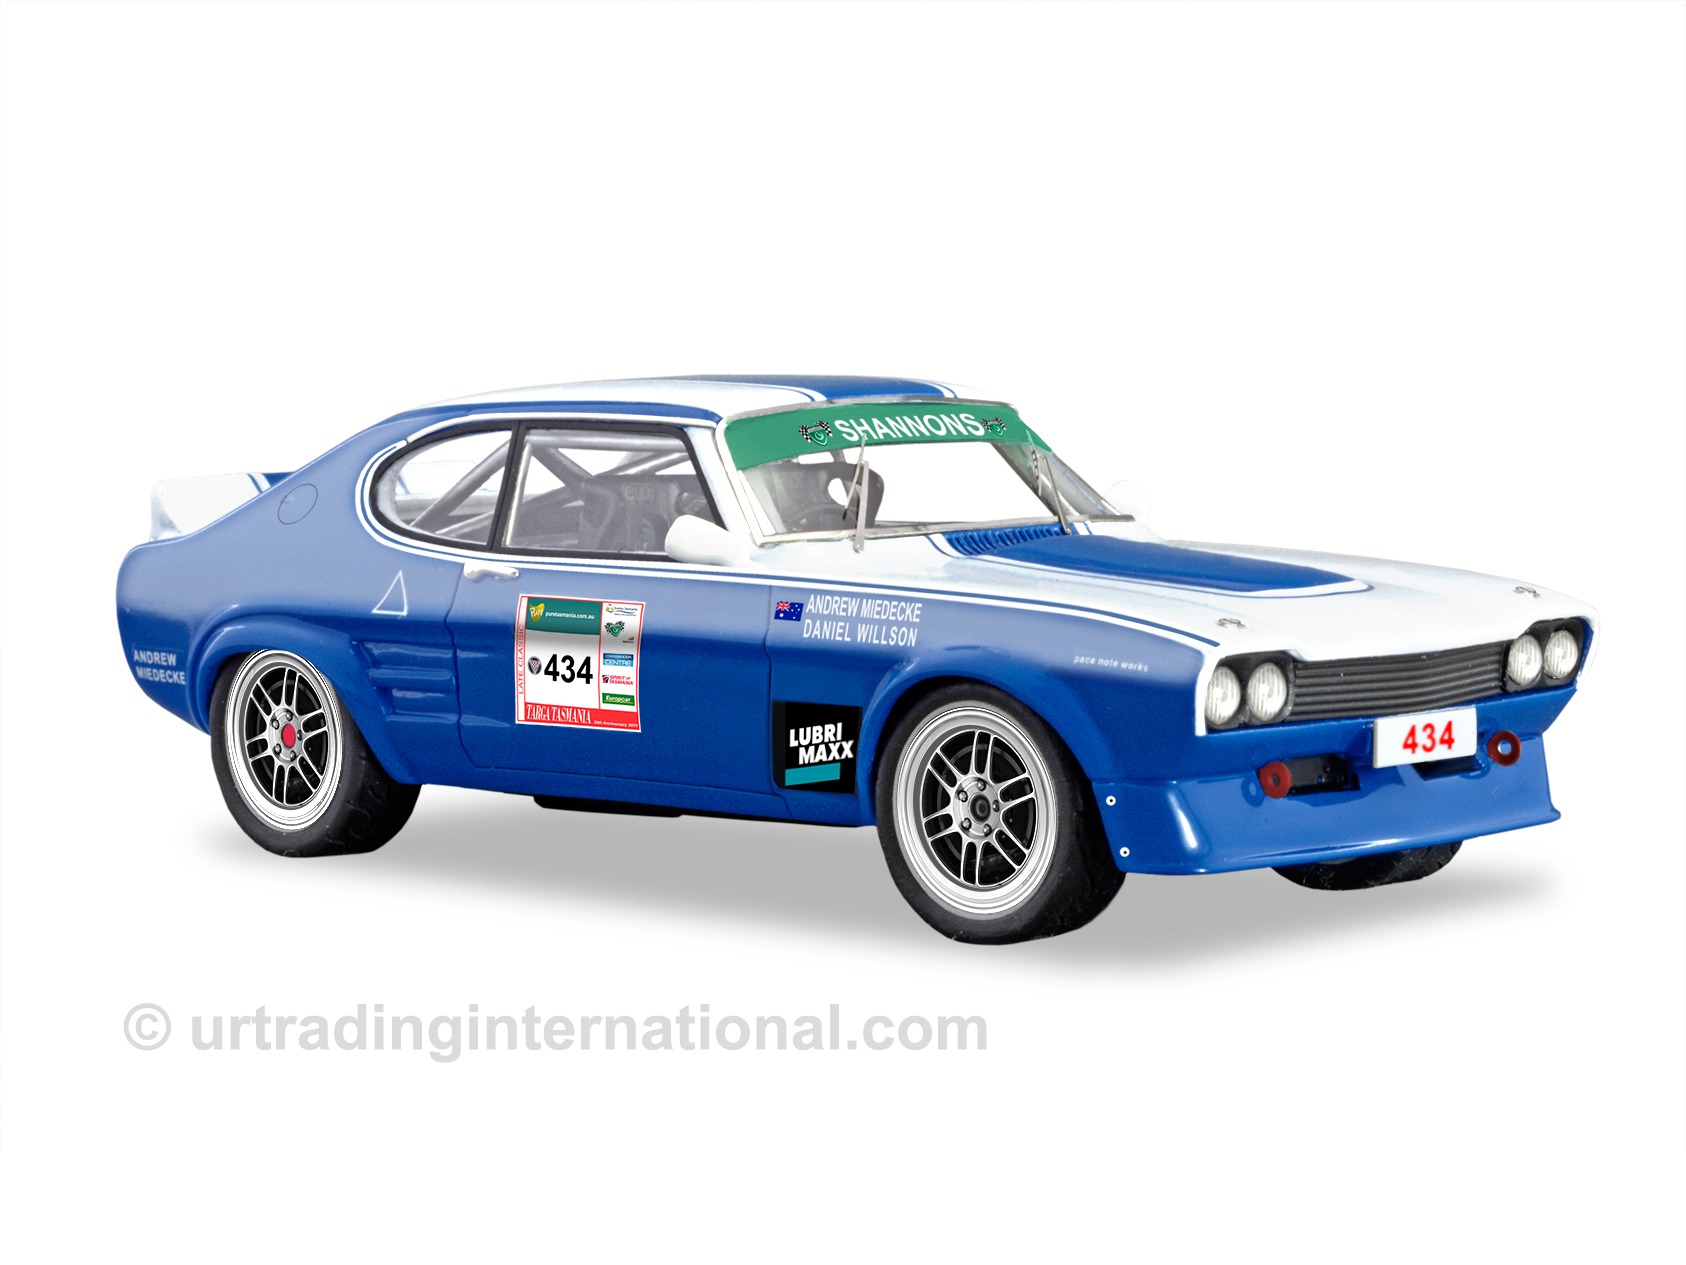 1970 Perana Capri MKI Race Car – Andrew Miedecke